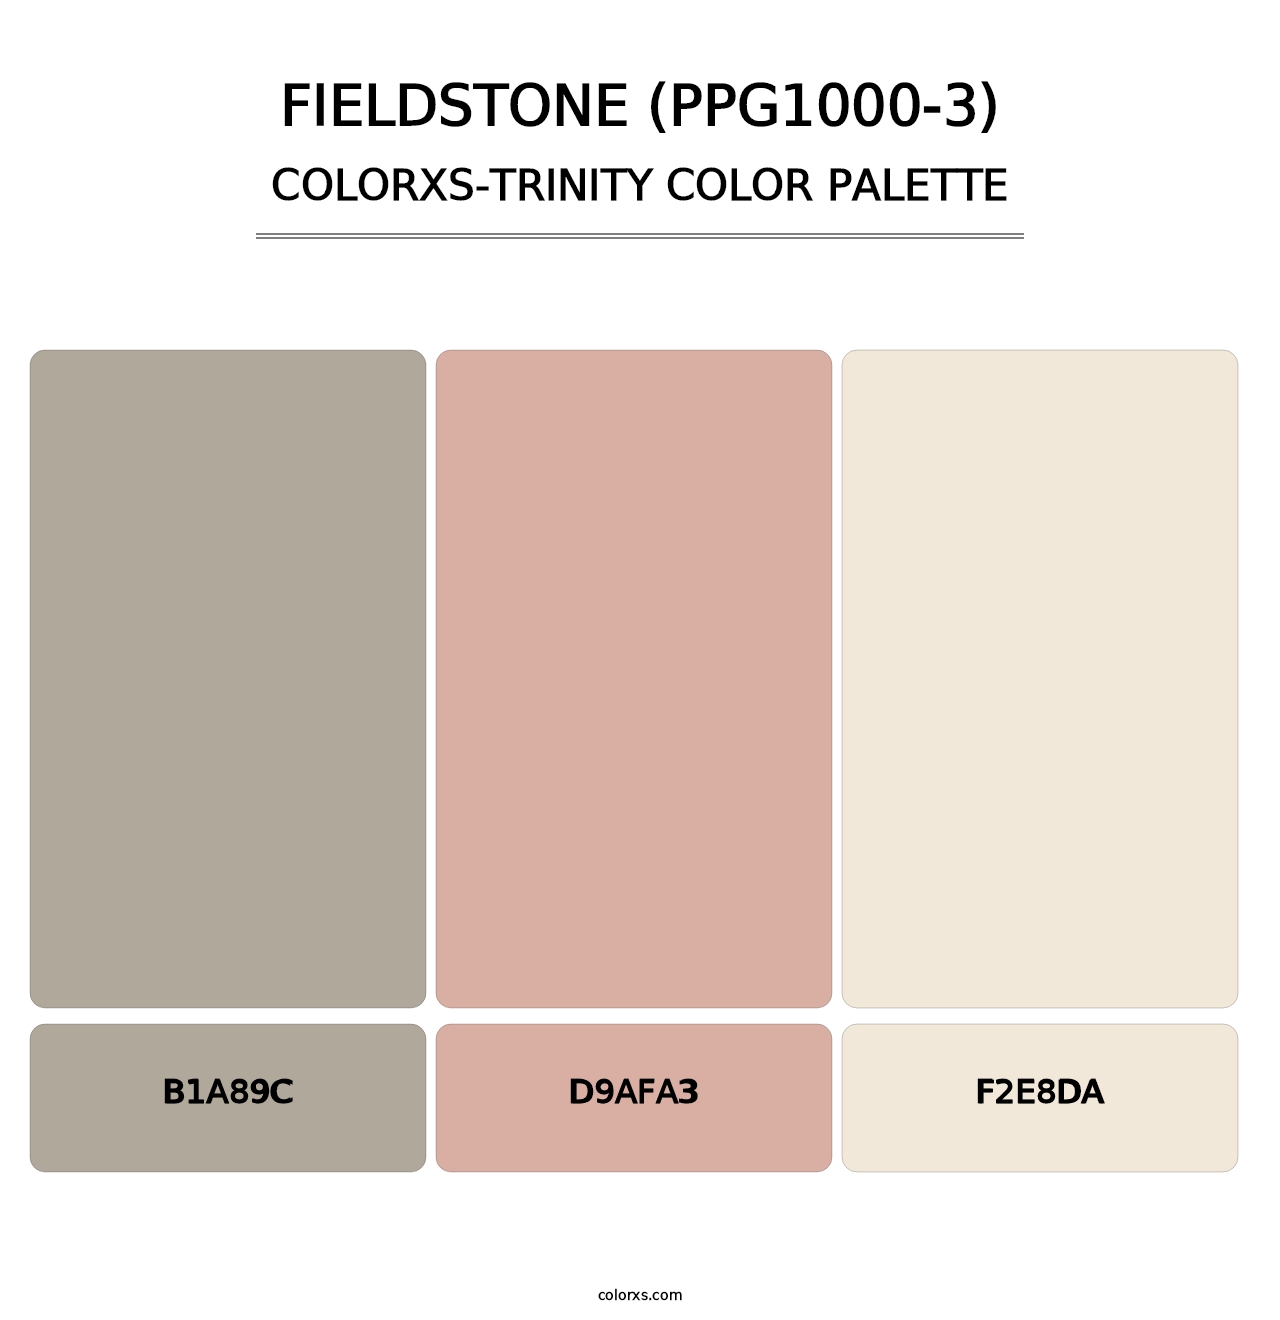 Fieldstone (PPG1000-3) - Colorxs Trinity Palette